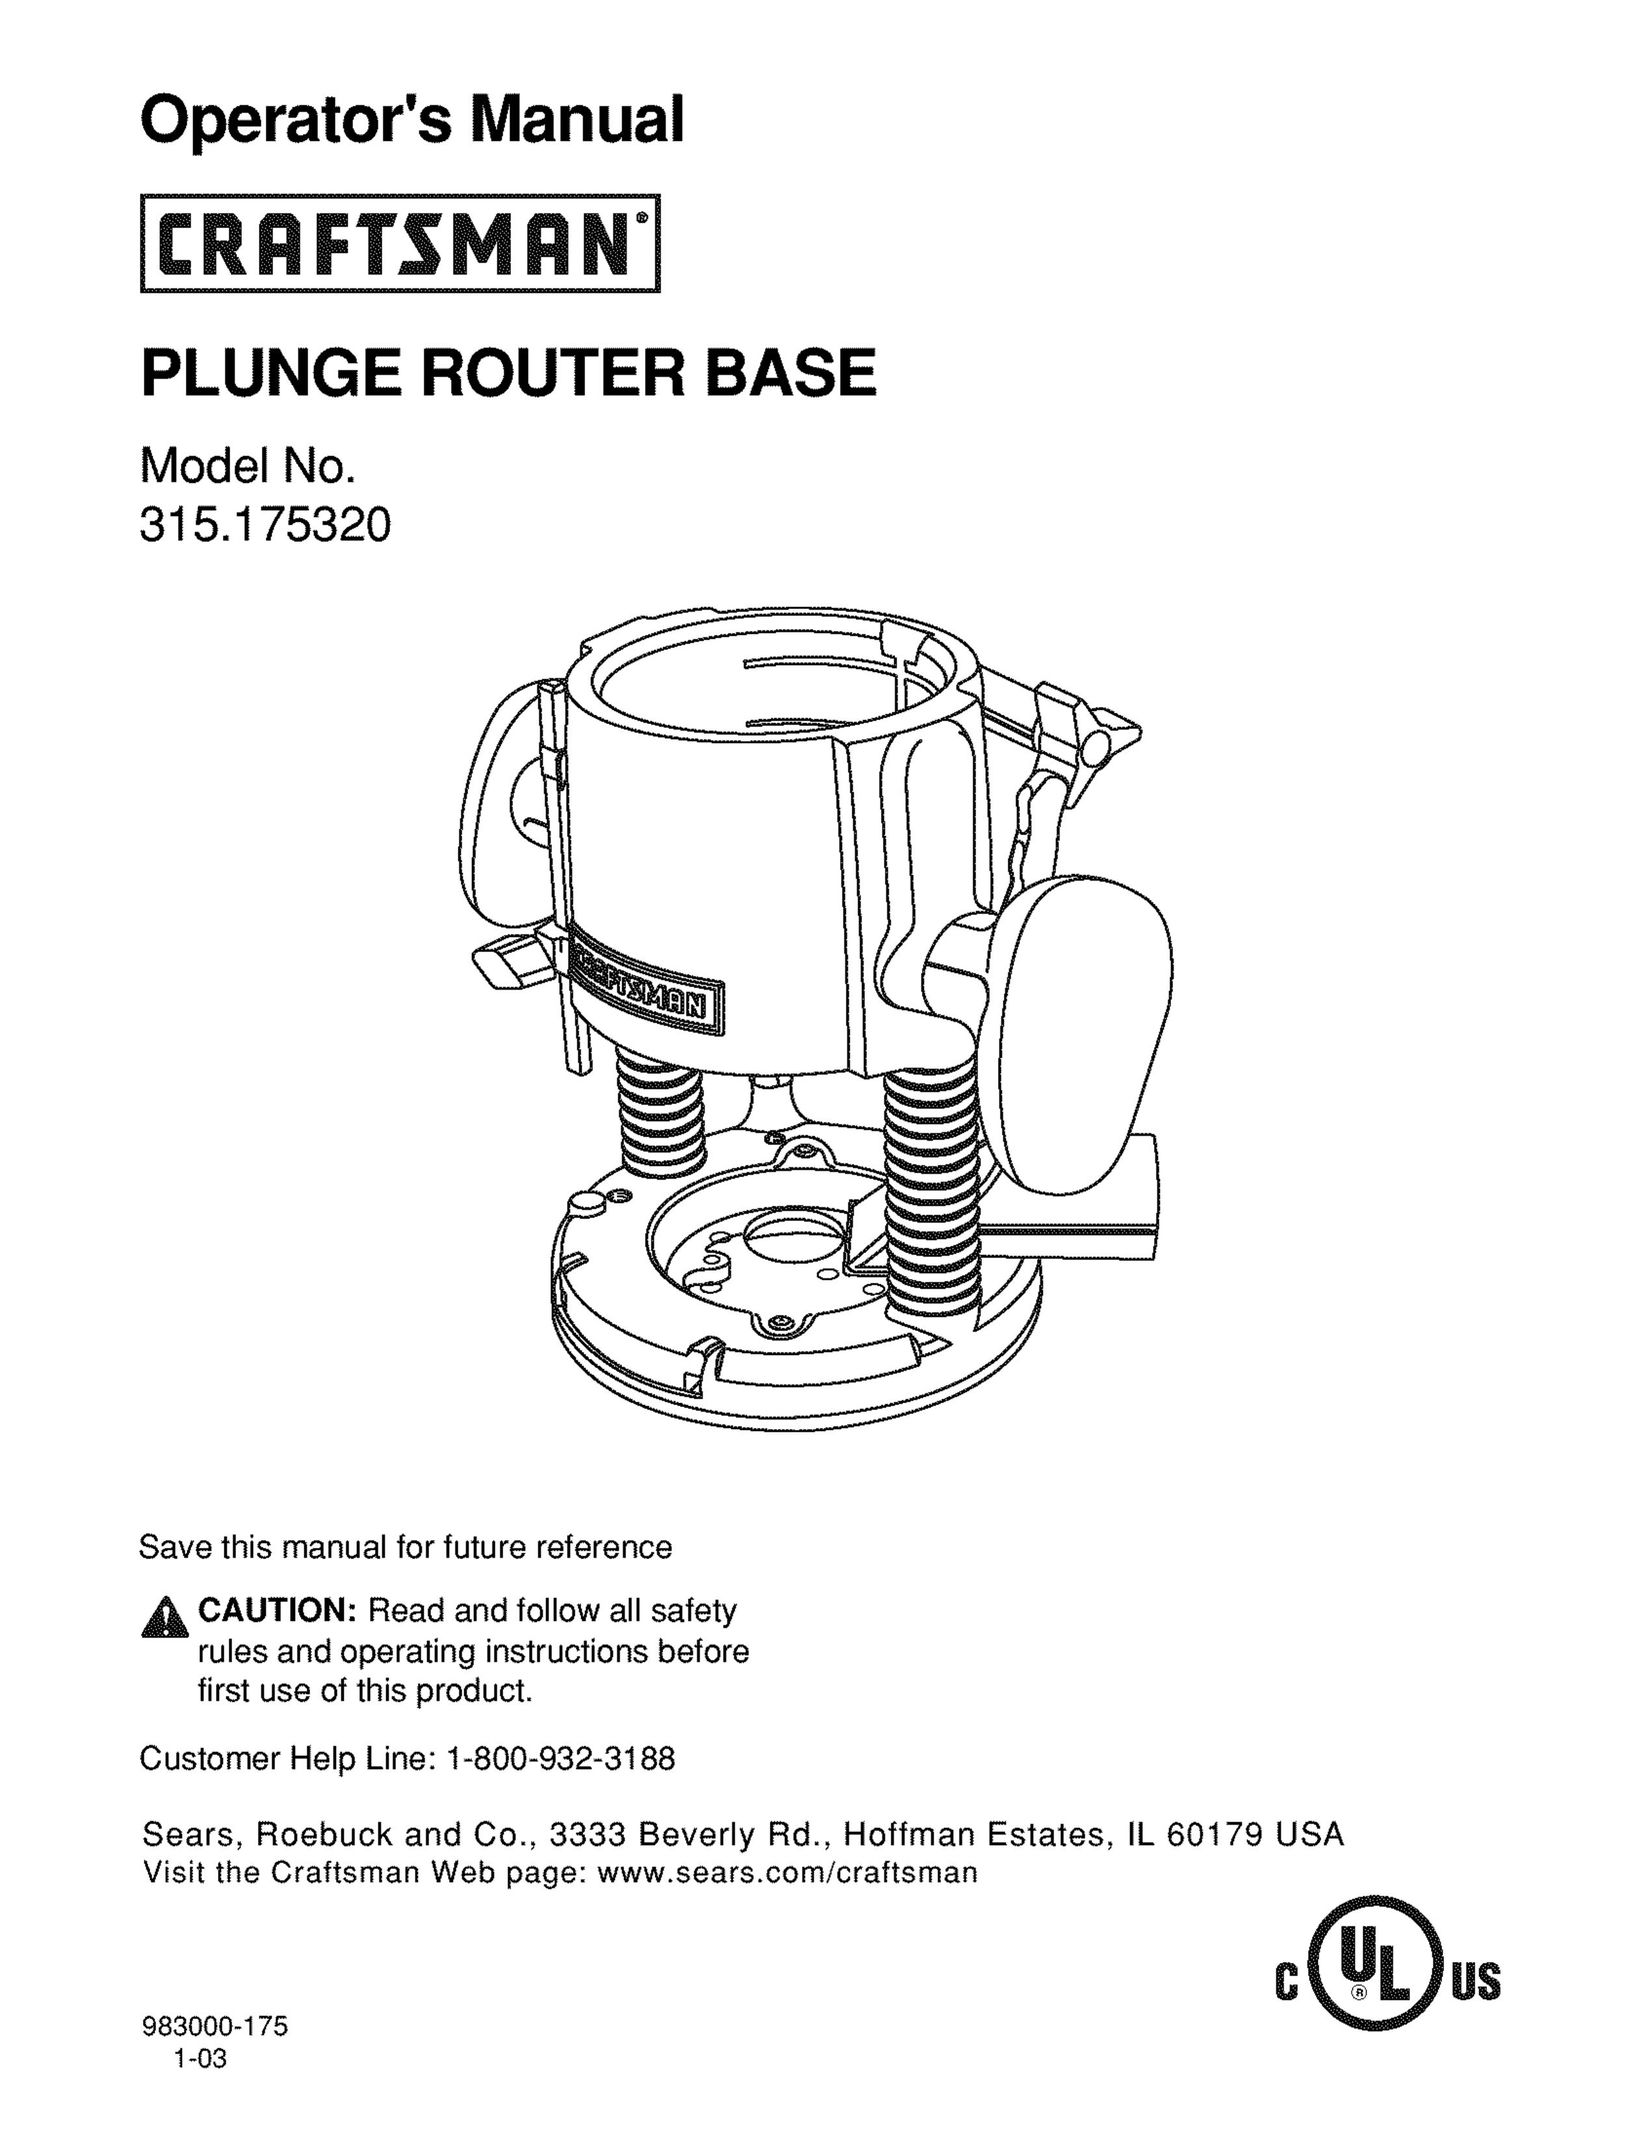 Craftsman 315.175320 Router User Manual